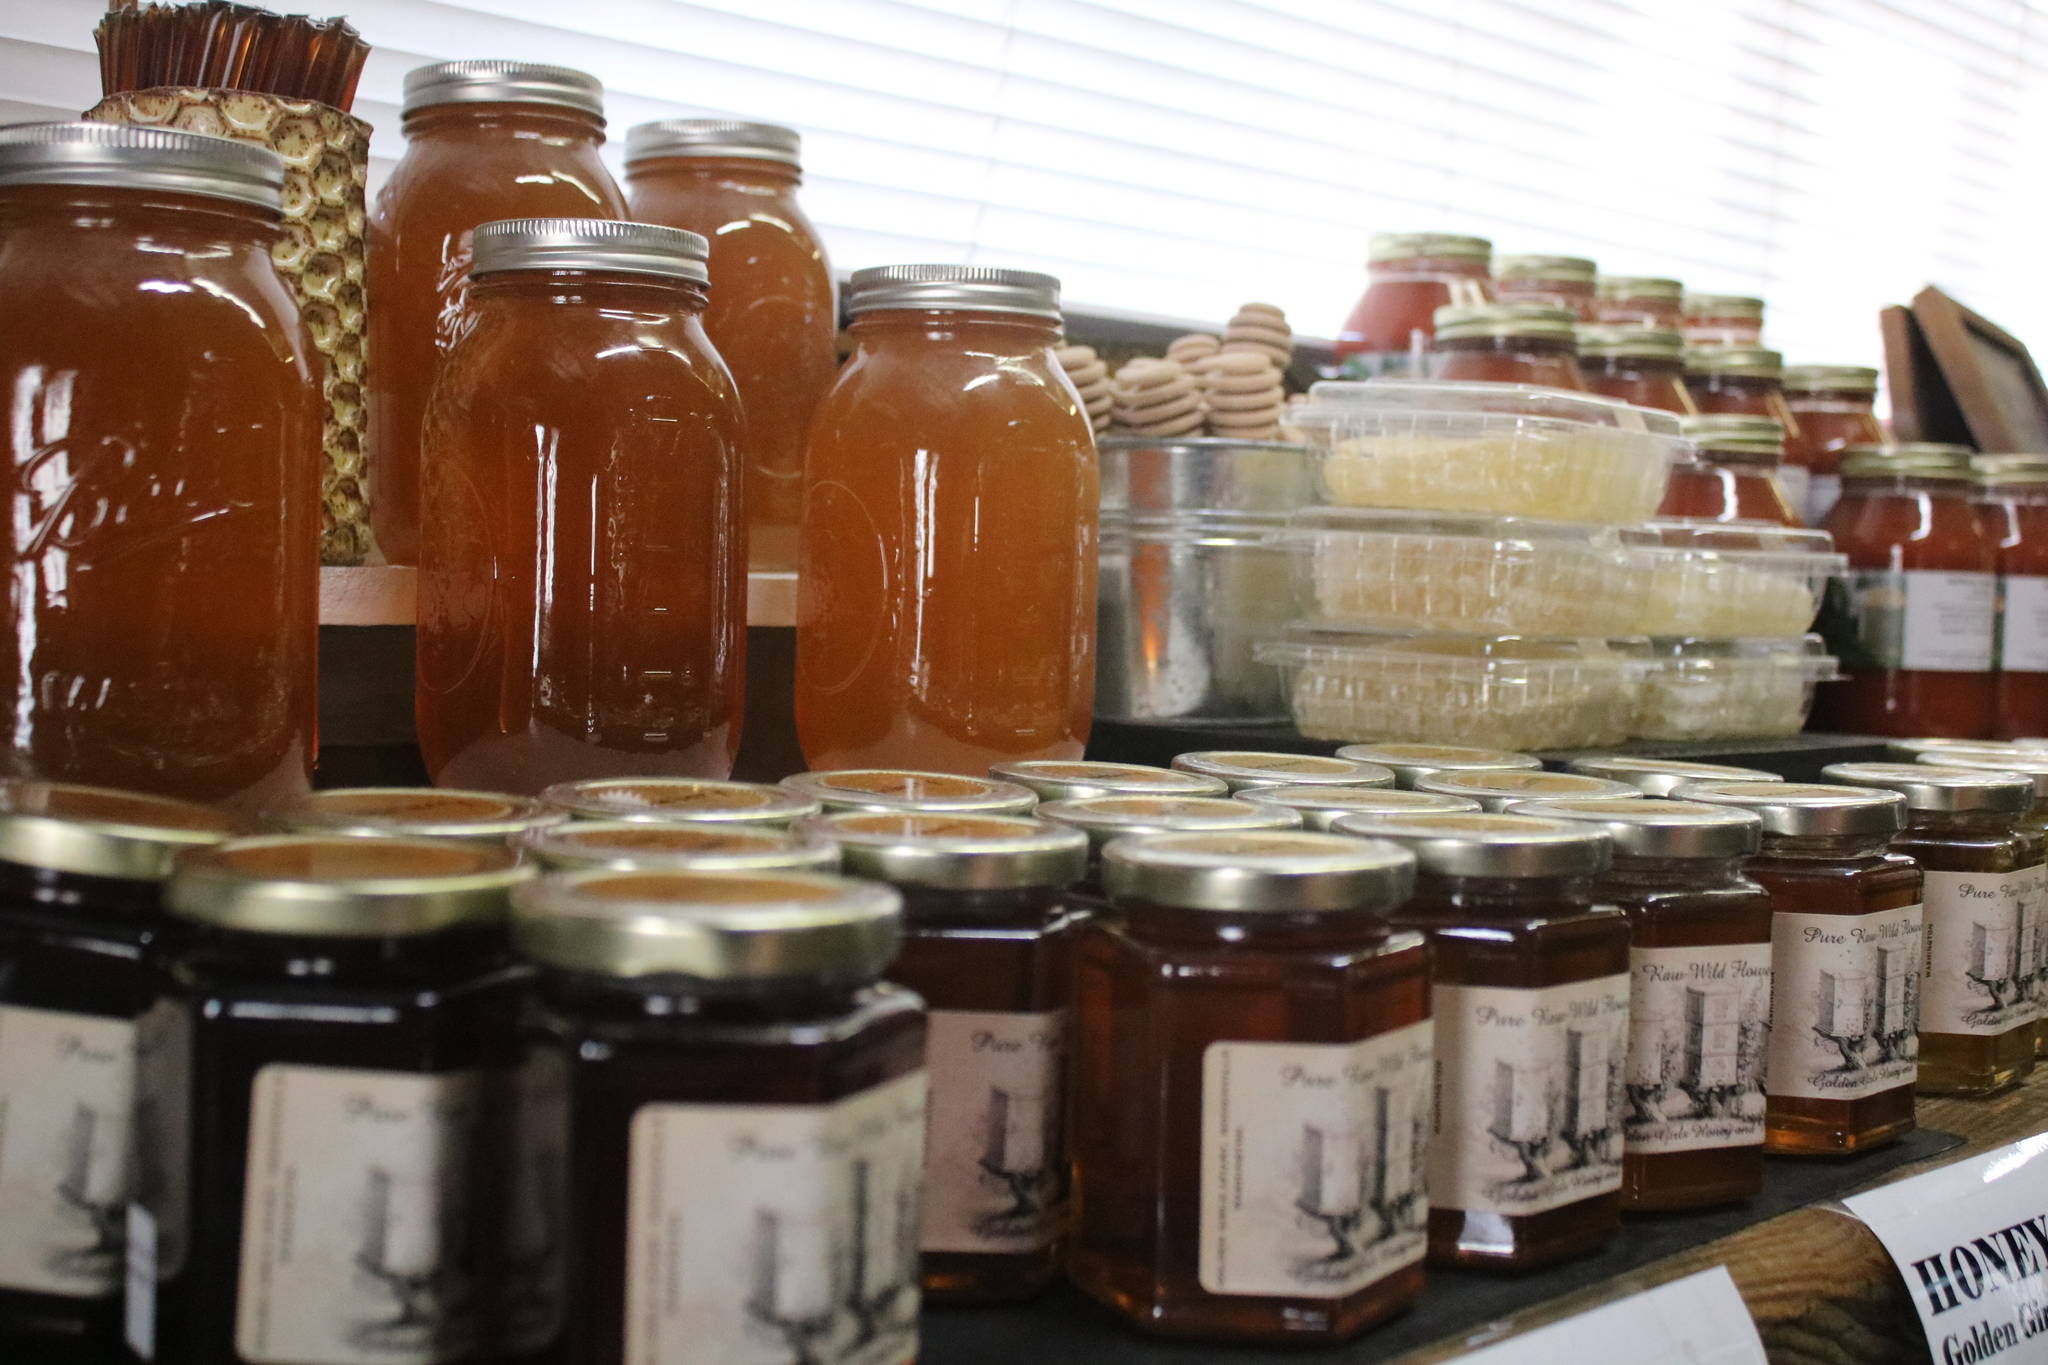 A sampling of honey found at Minea Farm in Redmond. Aaron Kunkler/Redmond Reporter